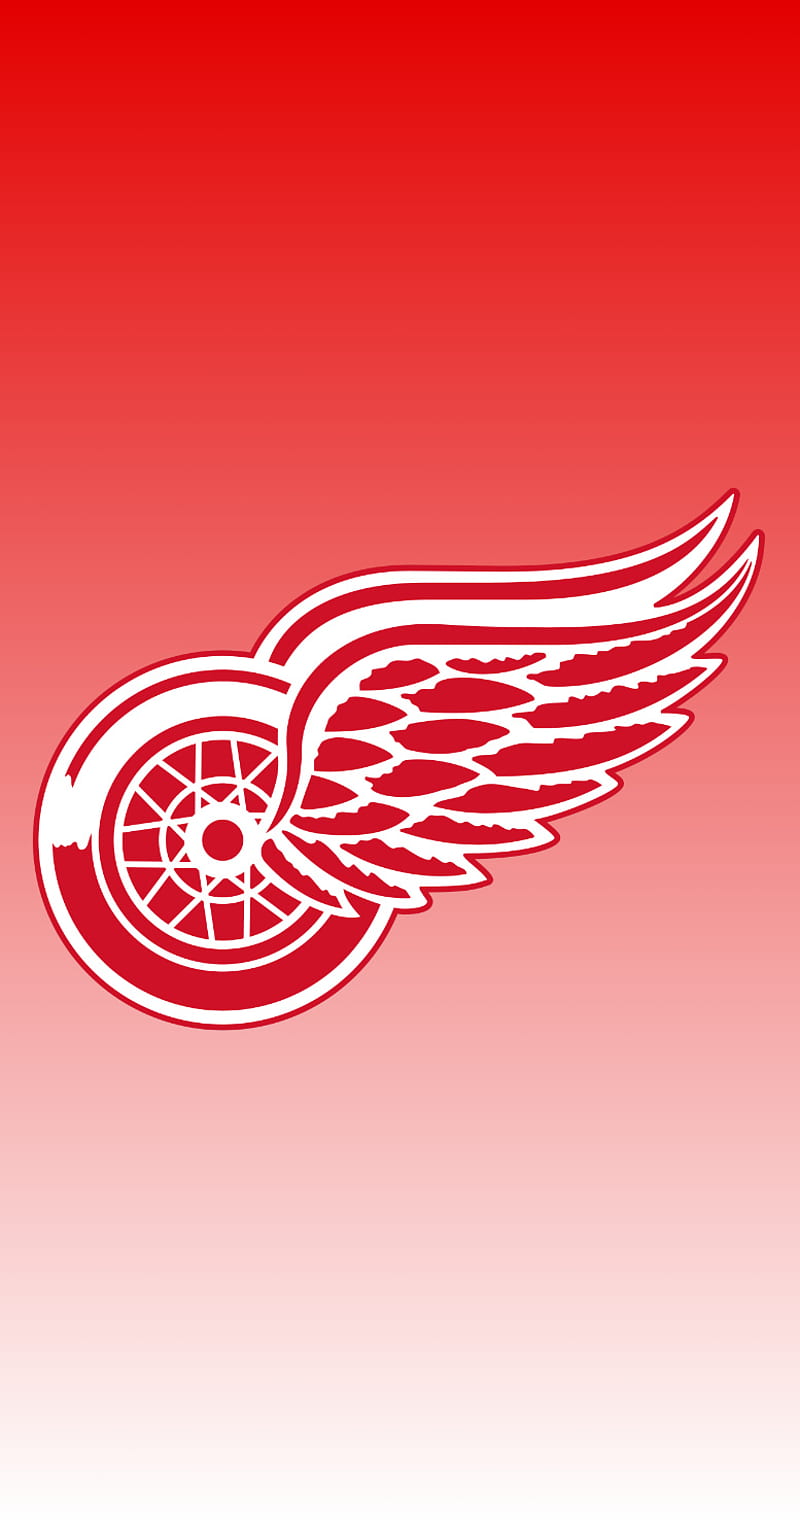 Detroit Red Wings (NHL) iPhone X/XS/XR/11 PRO Lock Screen …